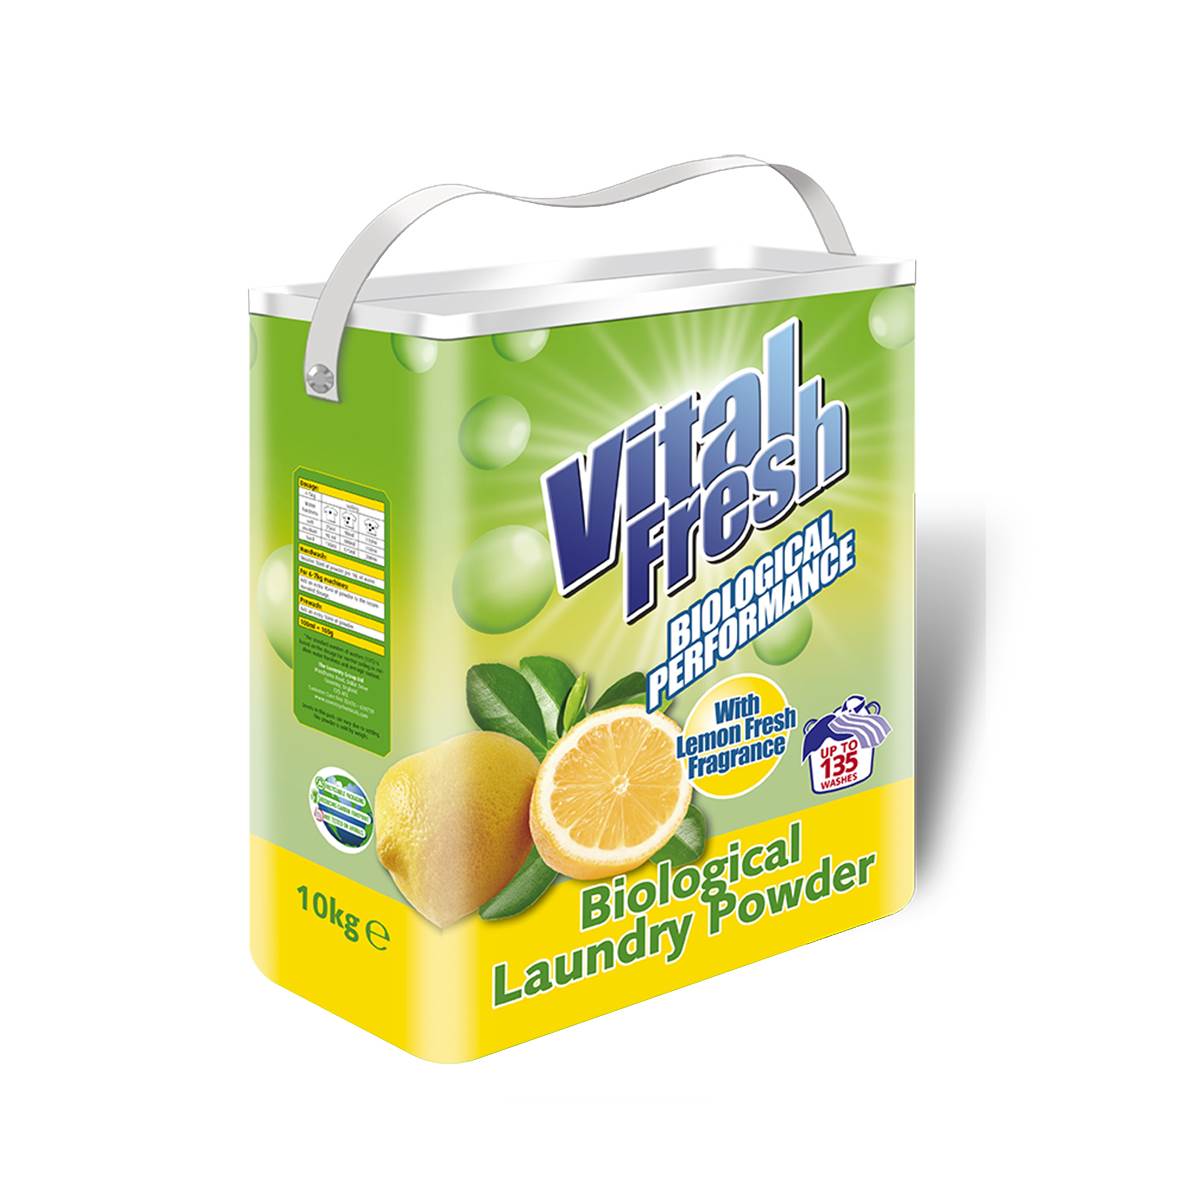 Vital Fresh Professional Laundry Powder 10kg, 135 Washes